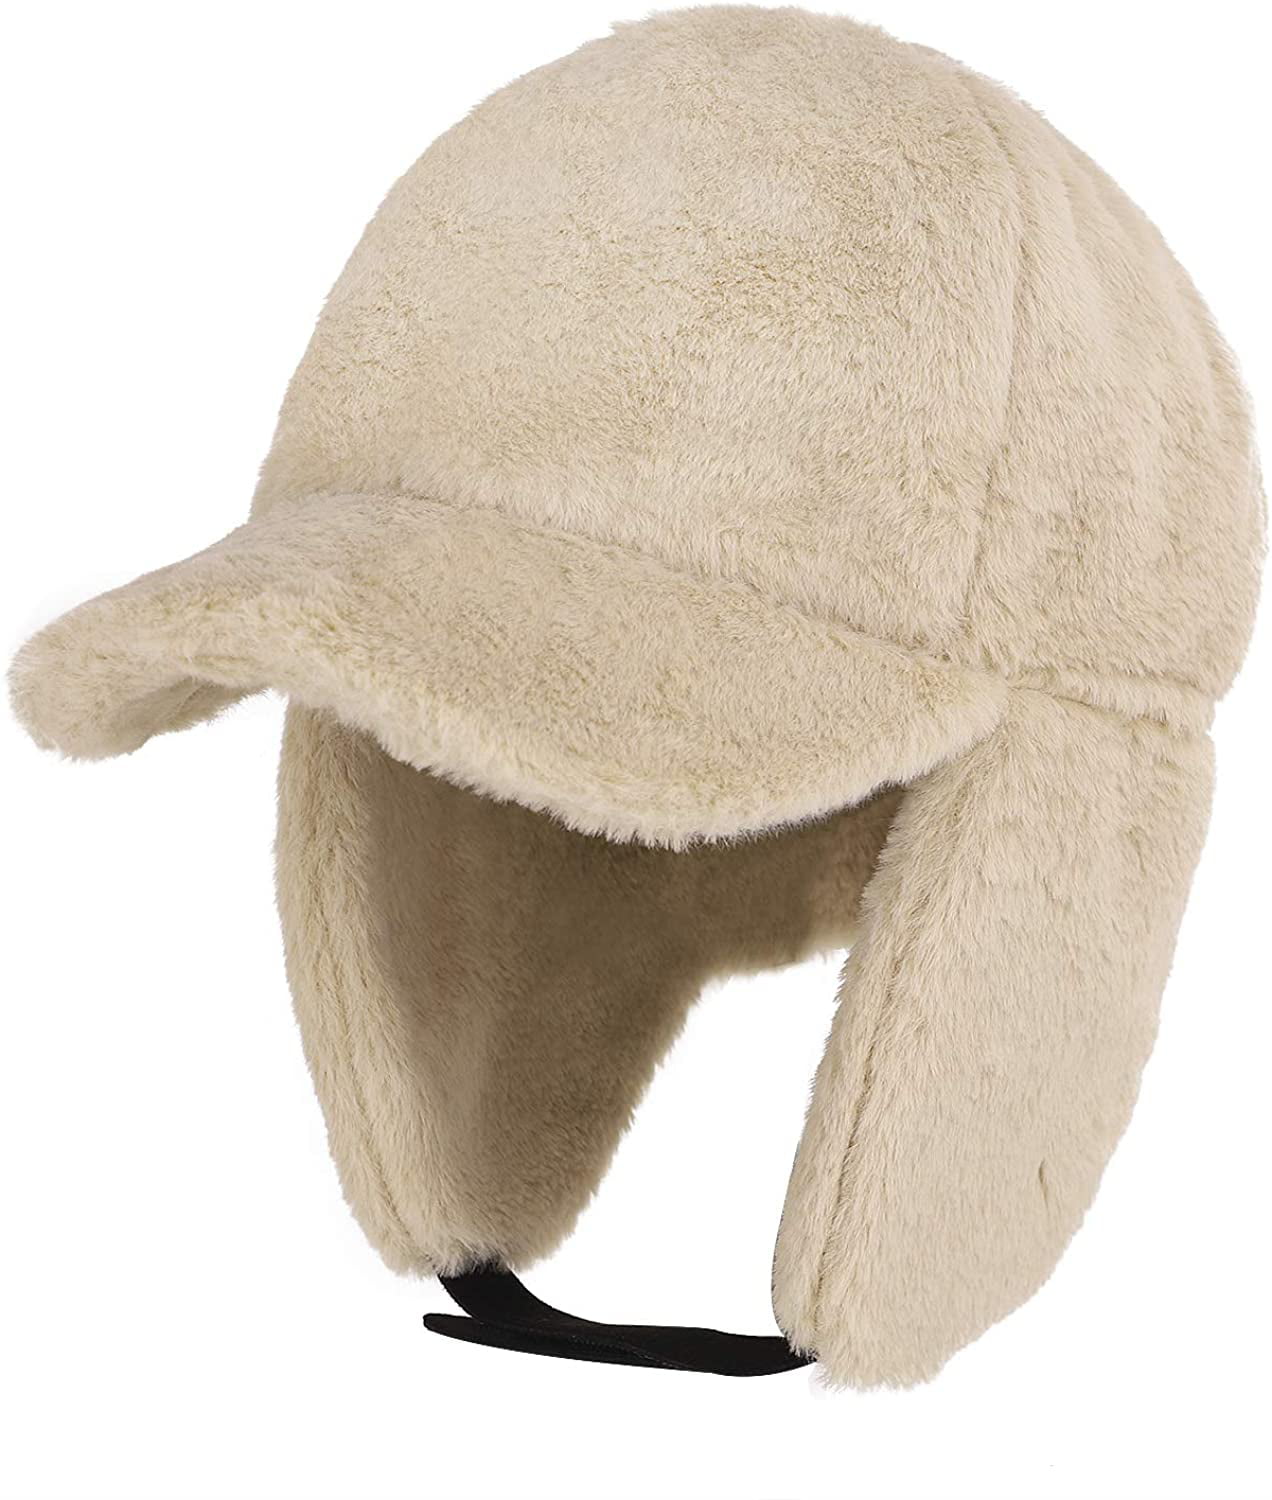 Womens Winter Furry Fleece Hat with Brim Earflap Fitted Hat Warmer Baseball Cap 